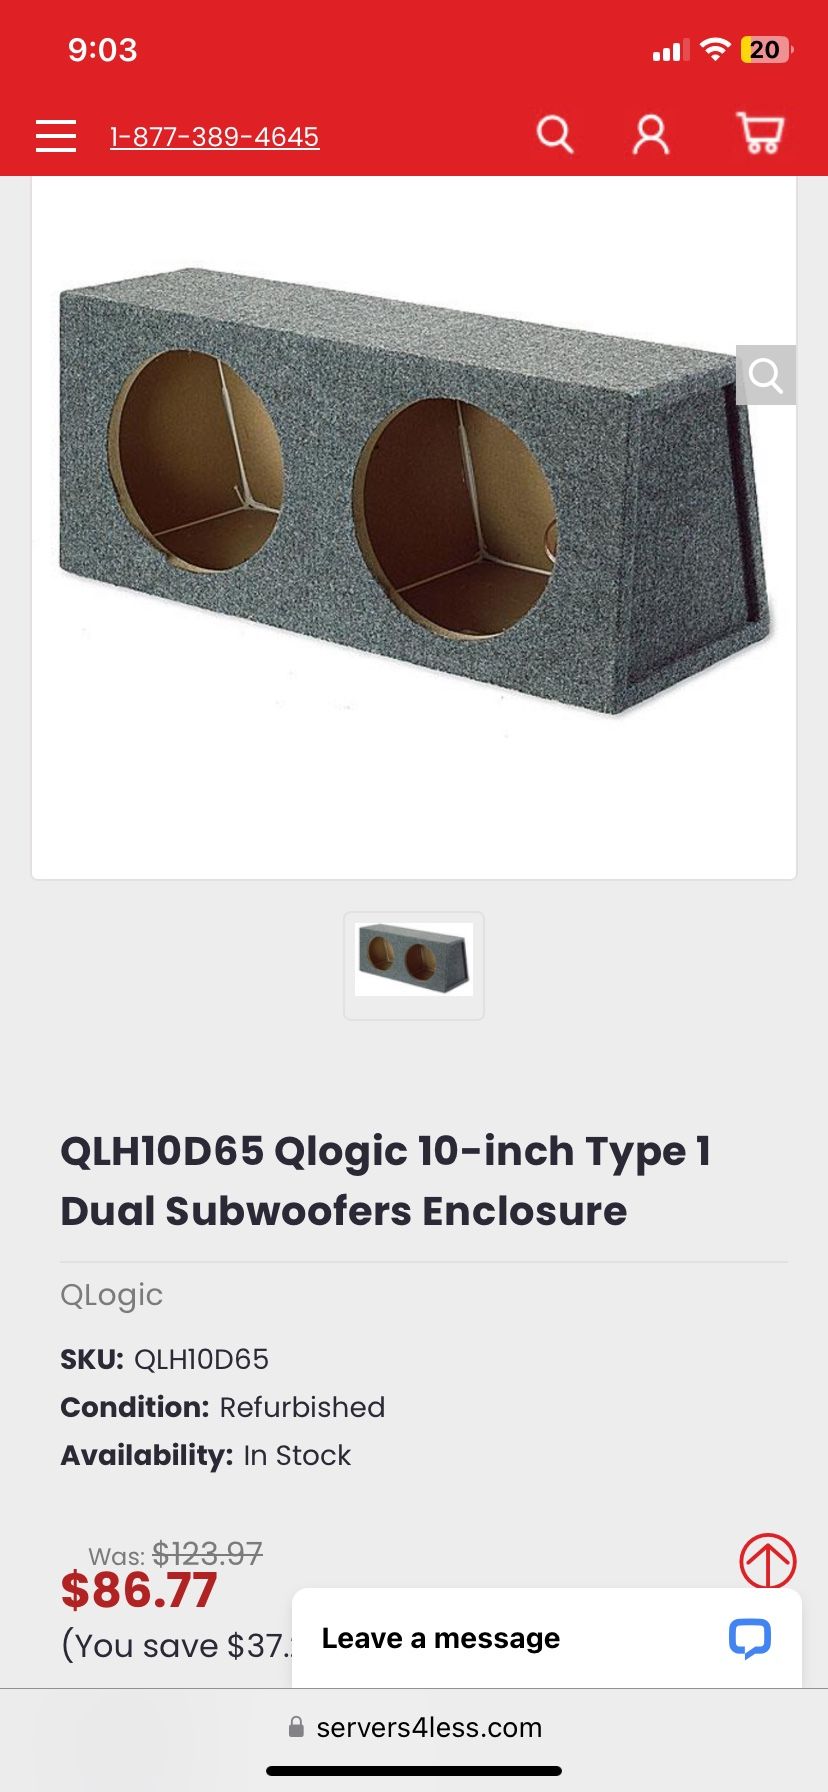 Qlogic 10-inch Type 1 Dual Subwoofers Enclosure / Box